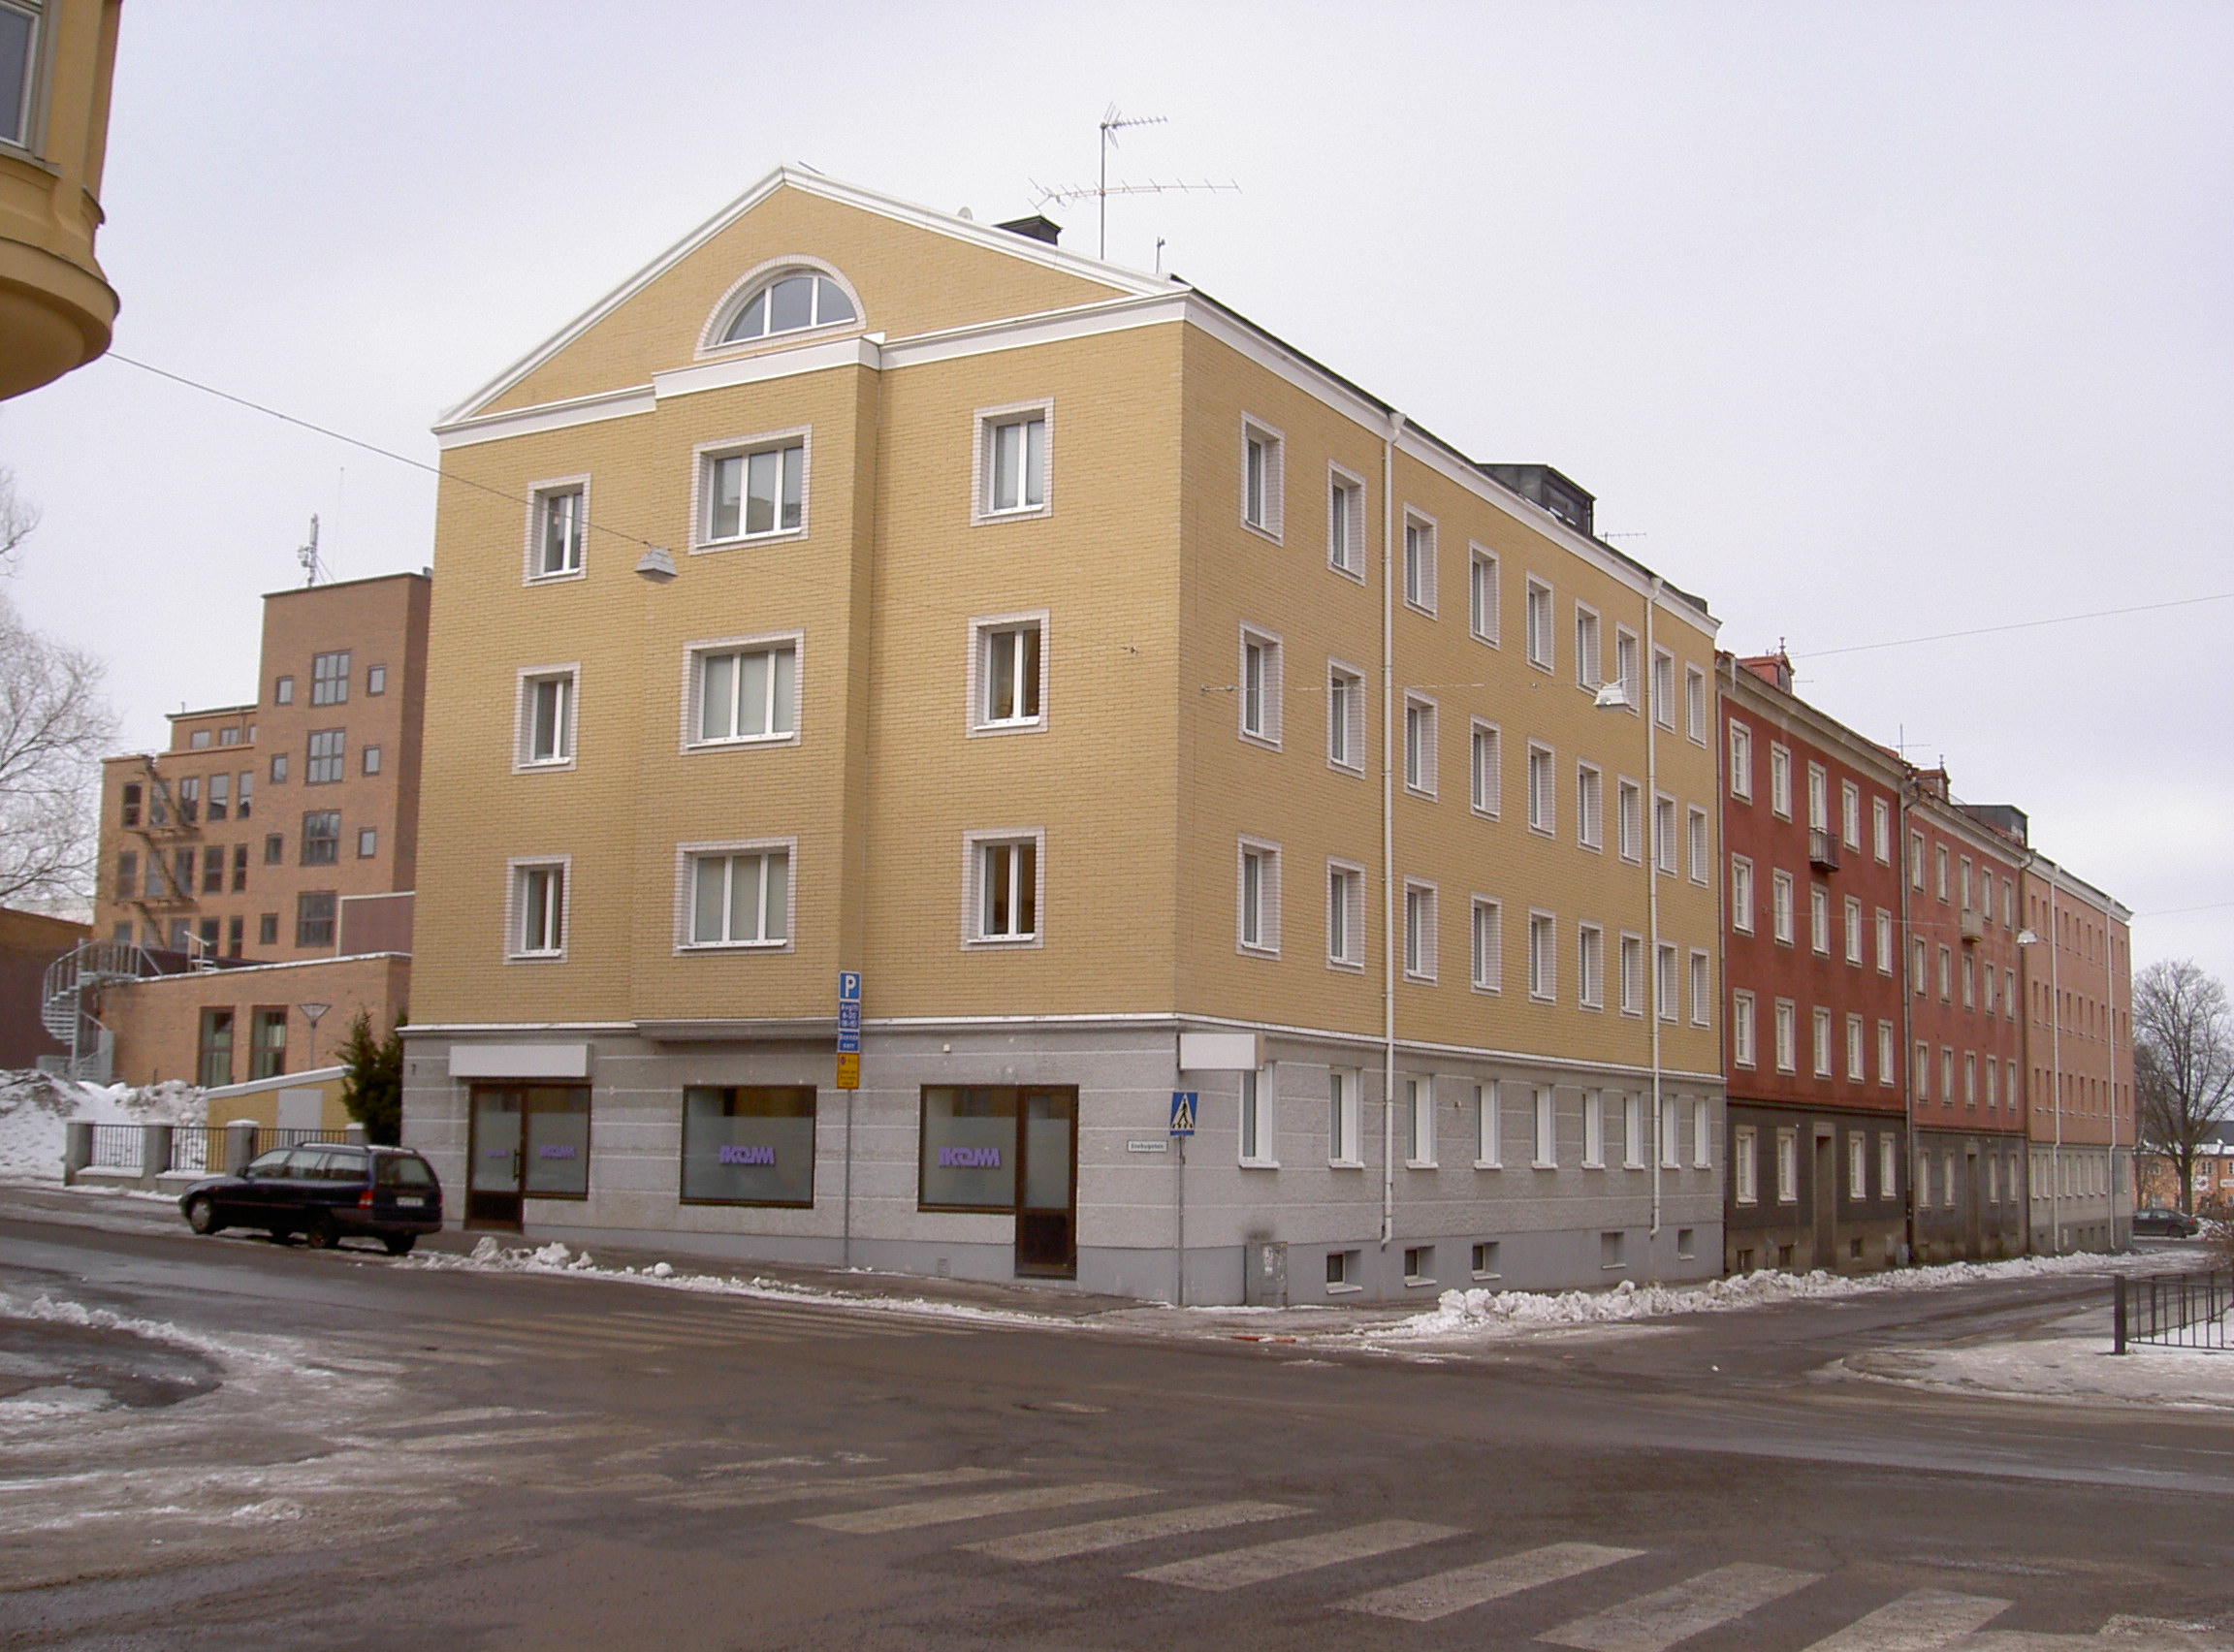 Lägenhet i Marielund, Norrköping, Sverige, Åbygatan 7